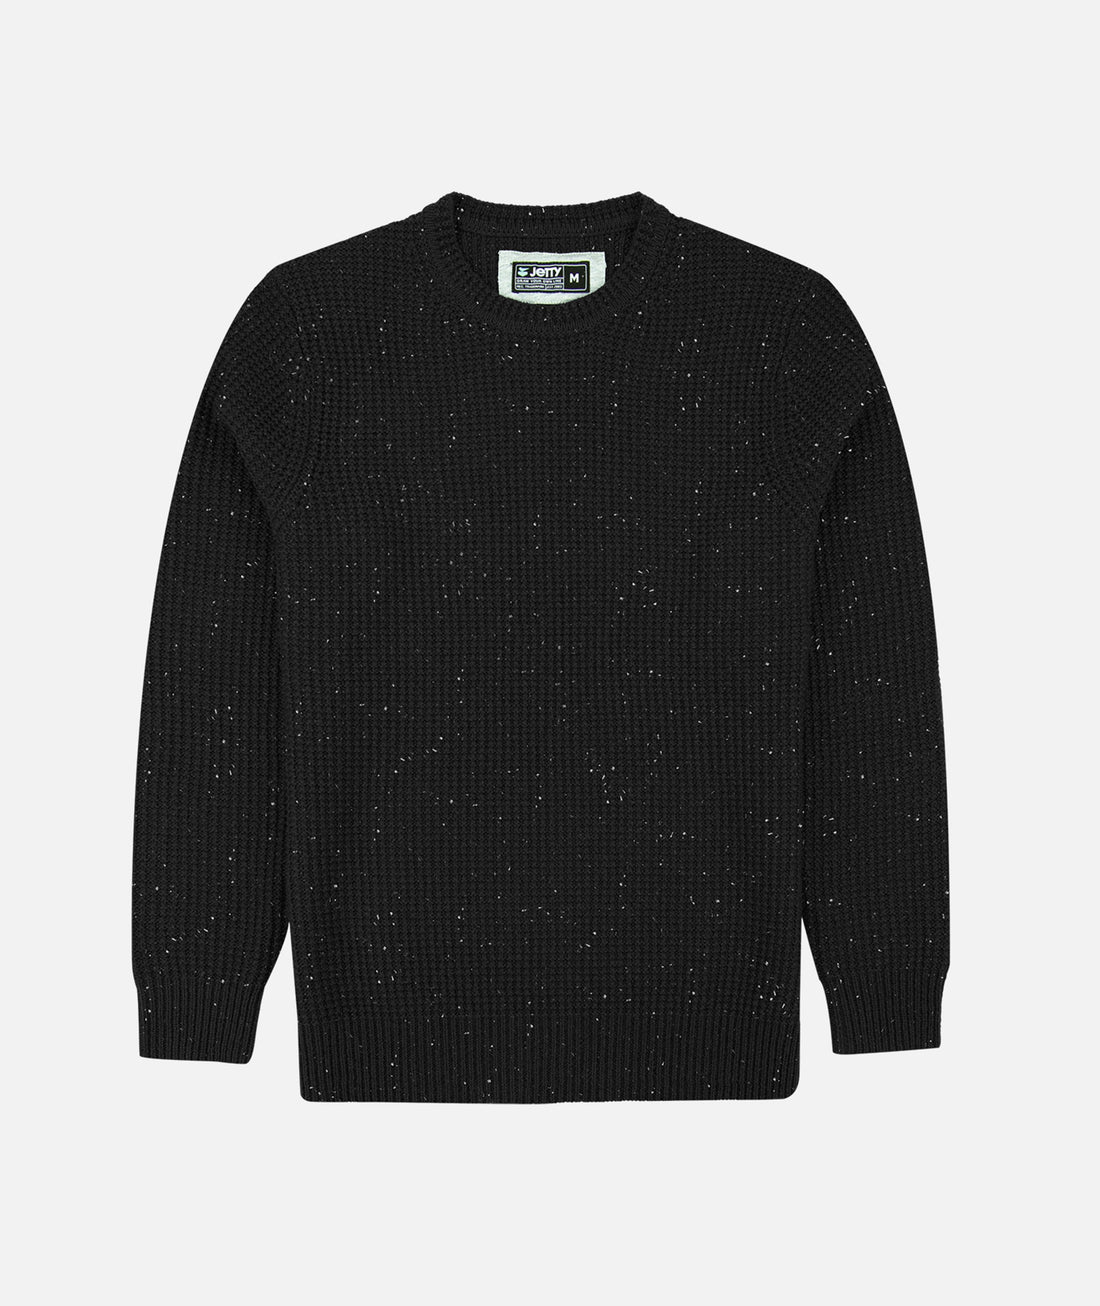 Men's Paragon Sweater